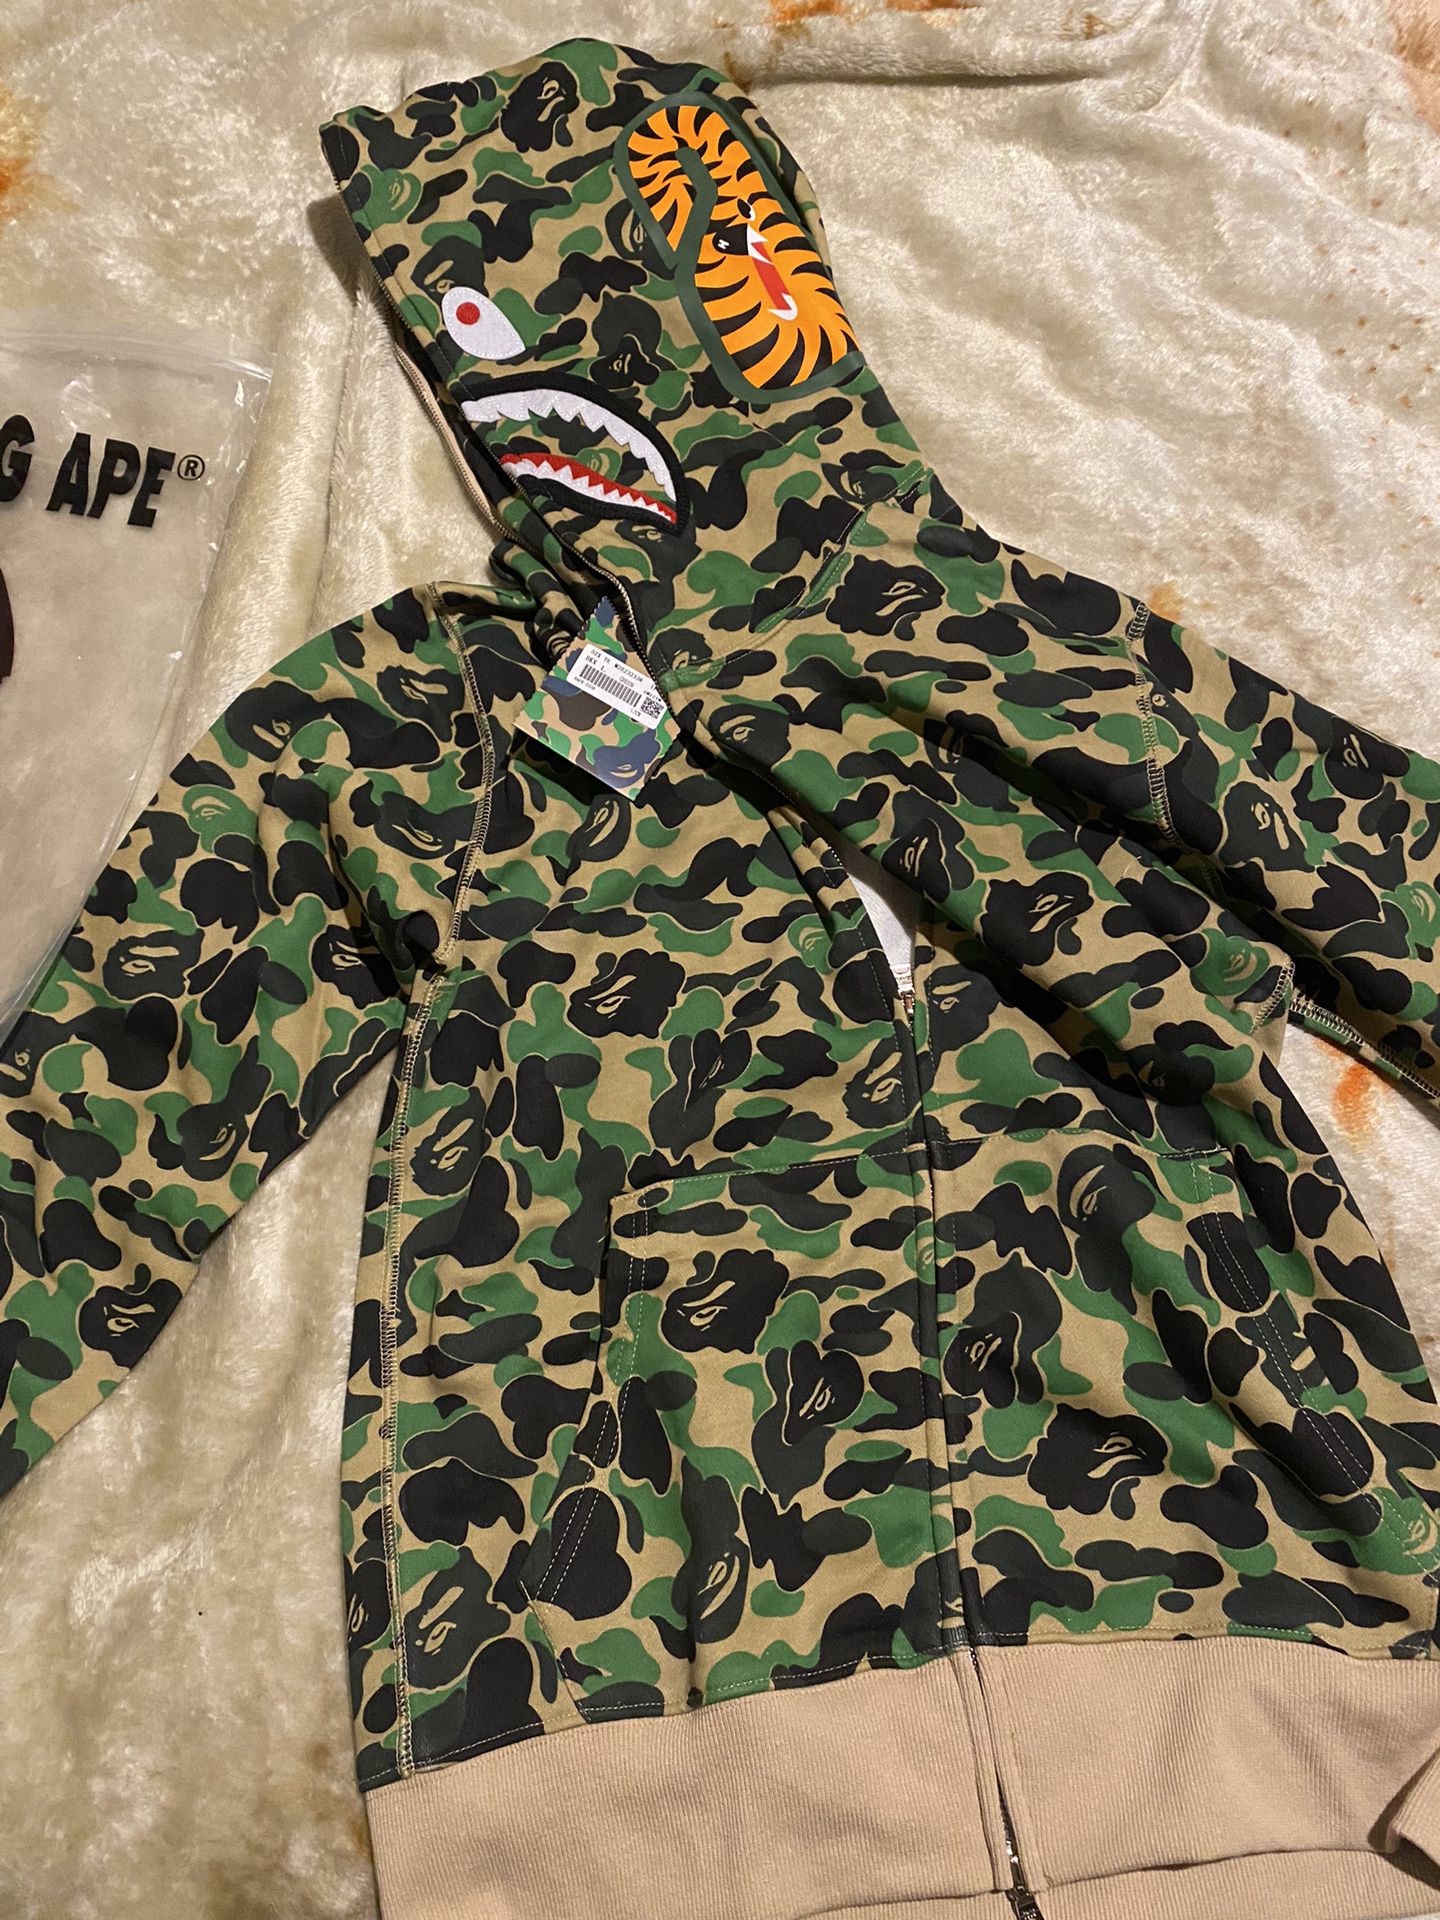 Green camouflage bape hoodie